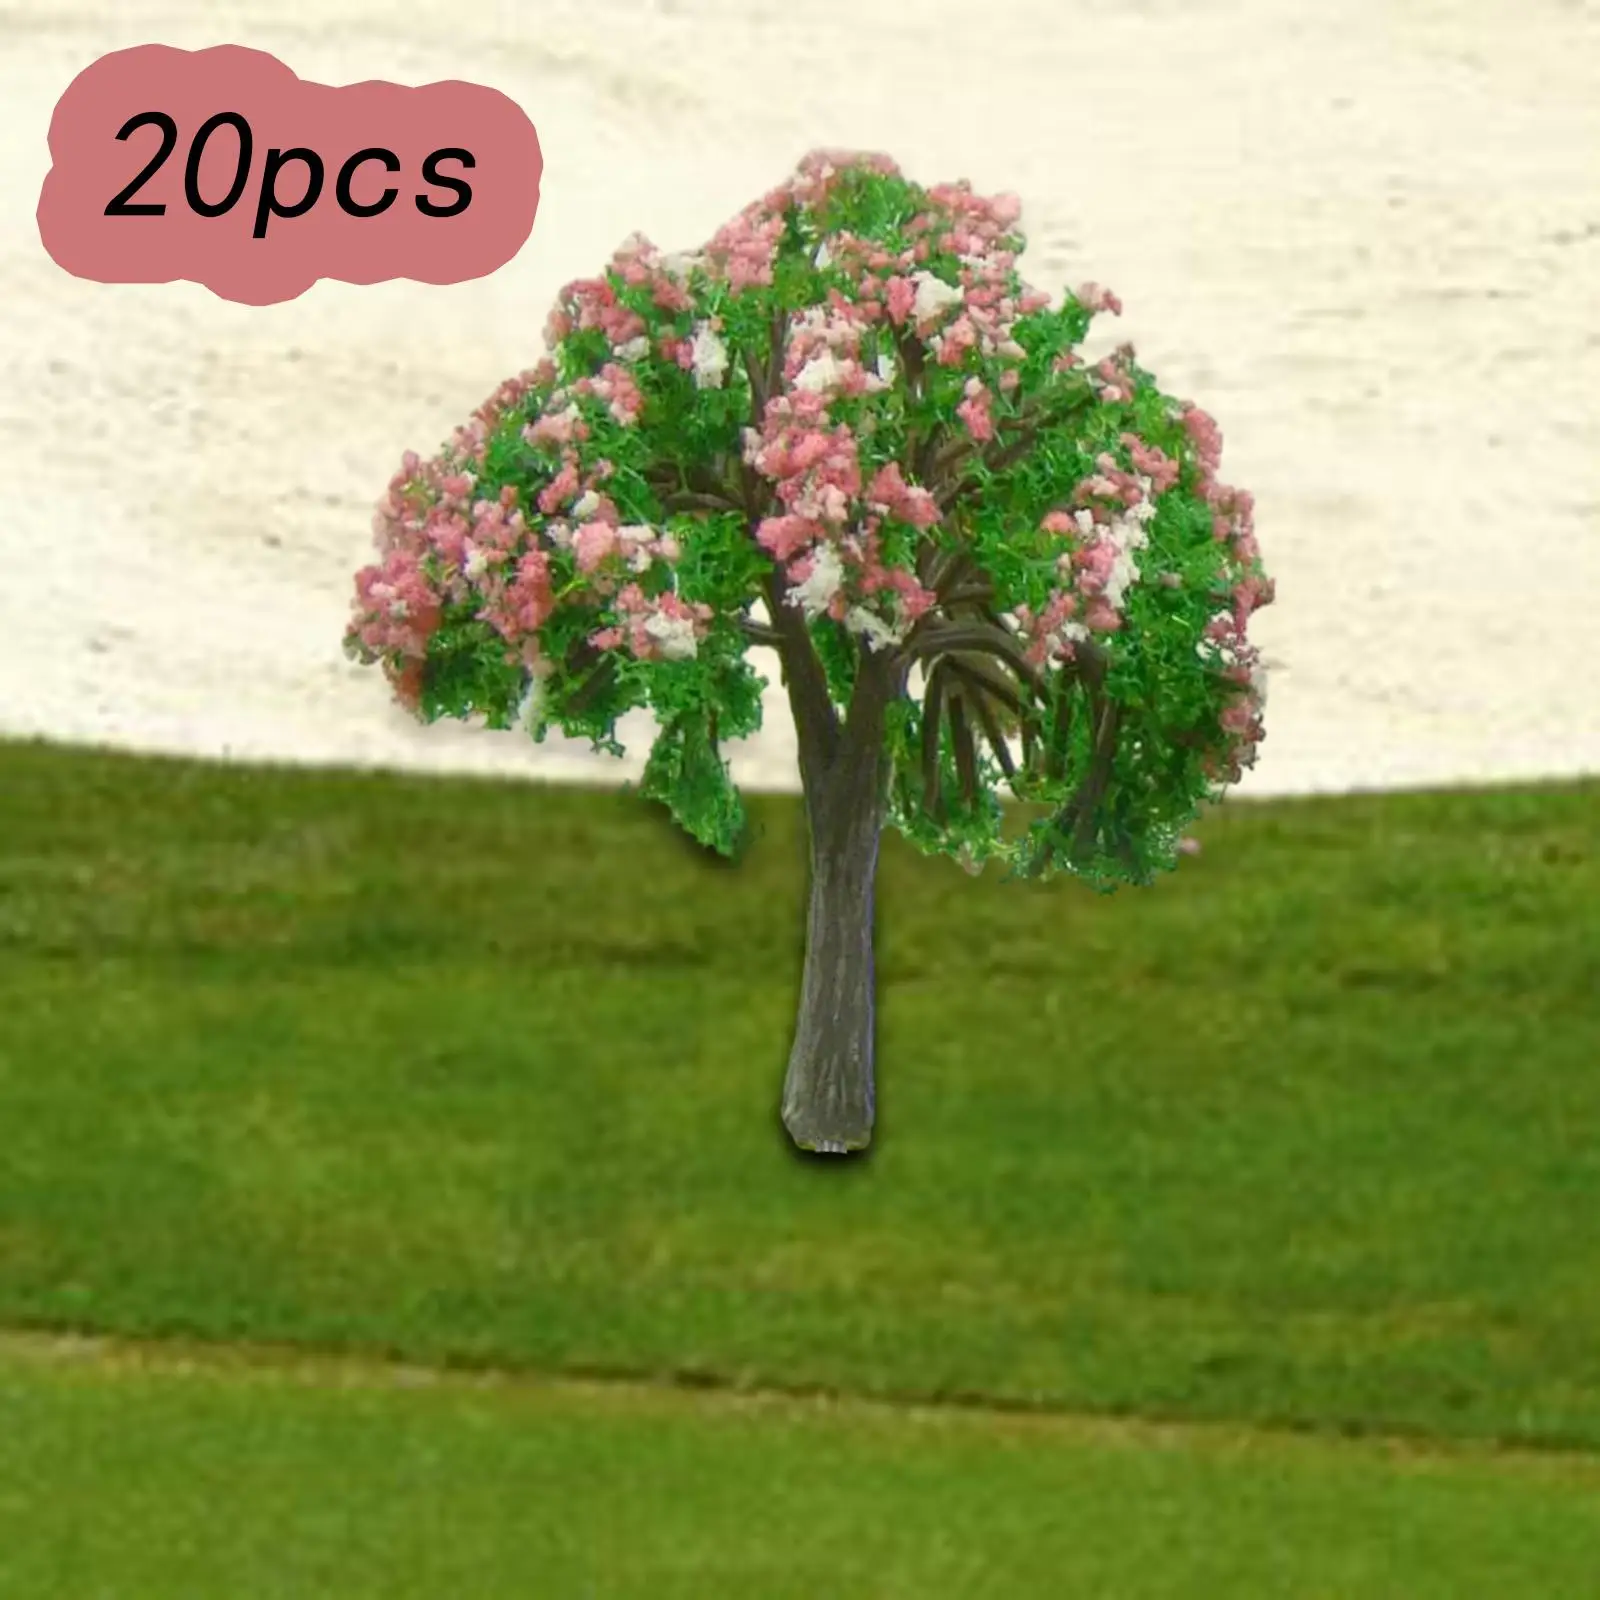 20Pcs 1/100 Scale Model Trees Train Scenery Landscape Railroad Green Scenery Tree for Fairy Garden Decor Diorama Layout Decor